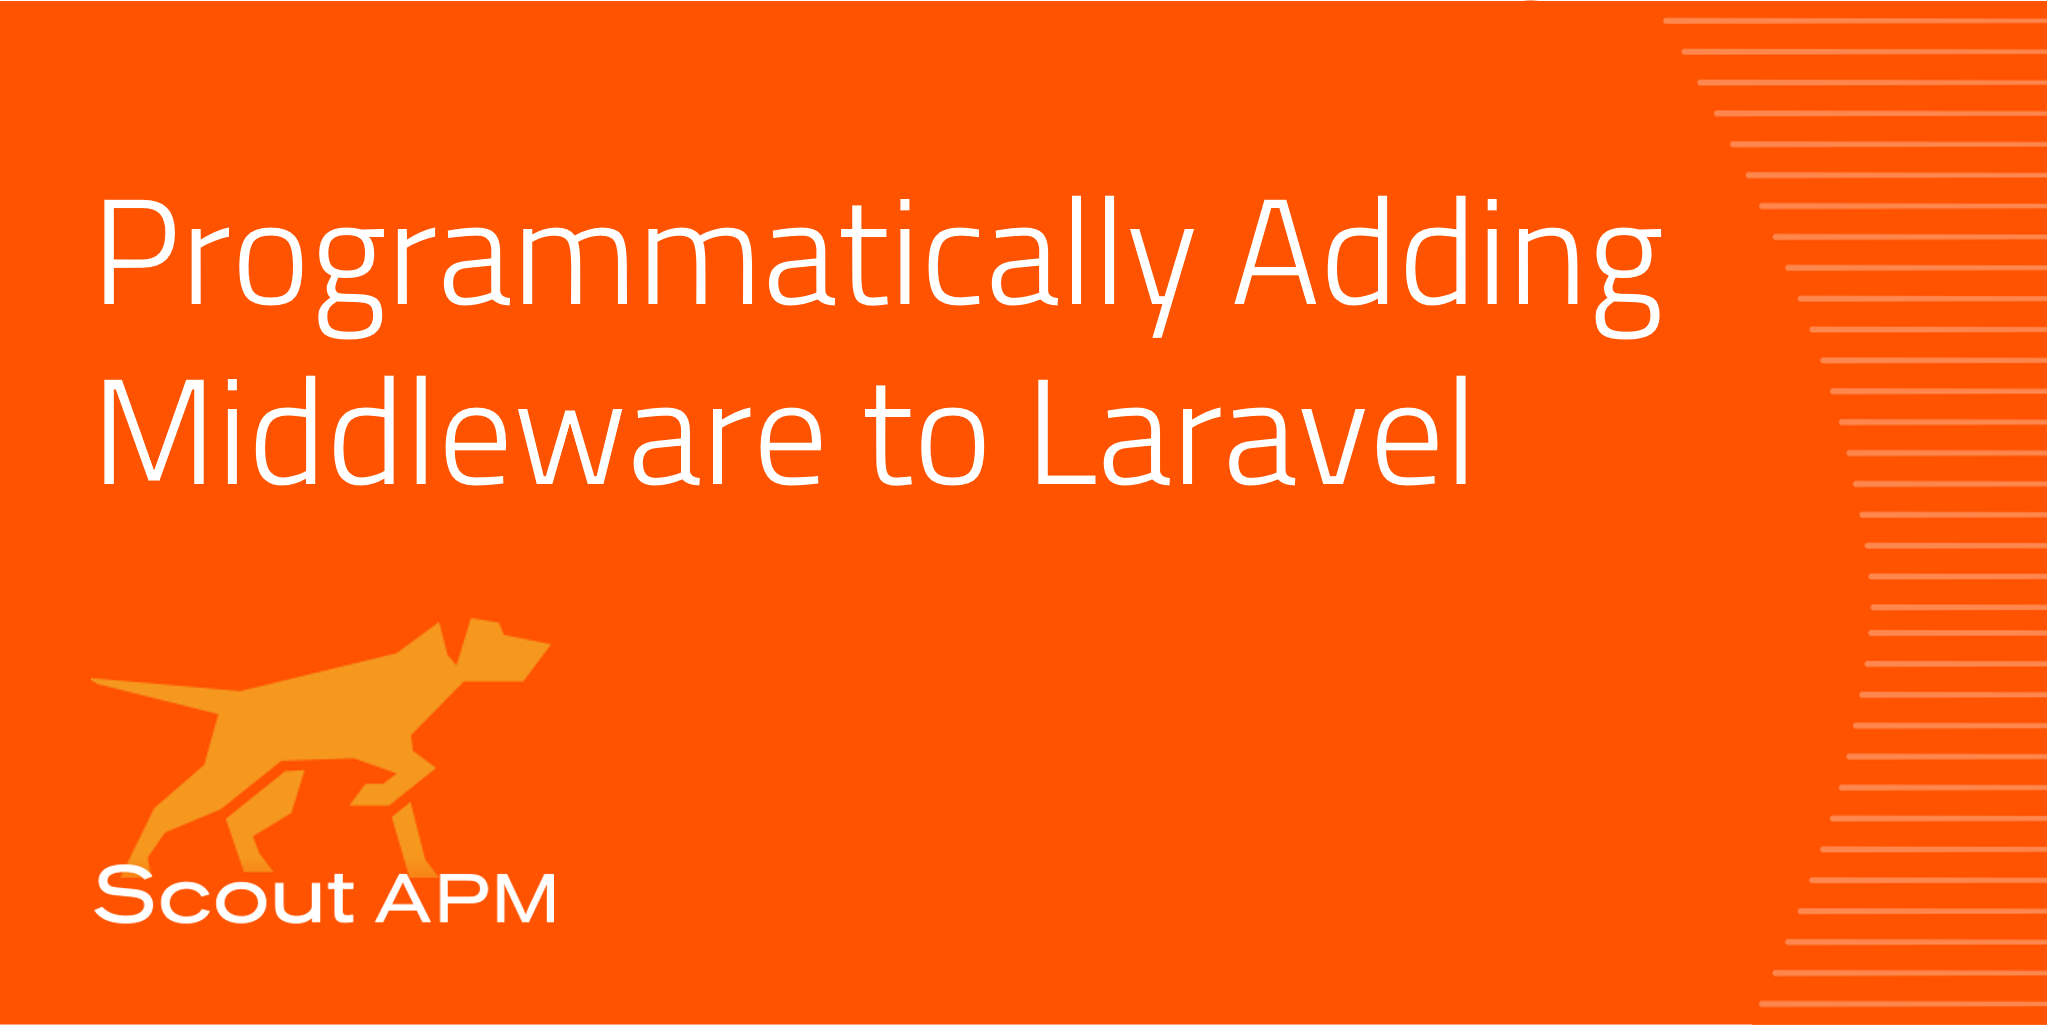 Programmatically Adding Middleware to Laravel (sponsor) image